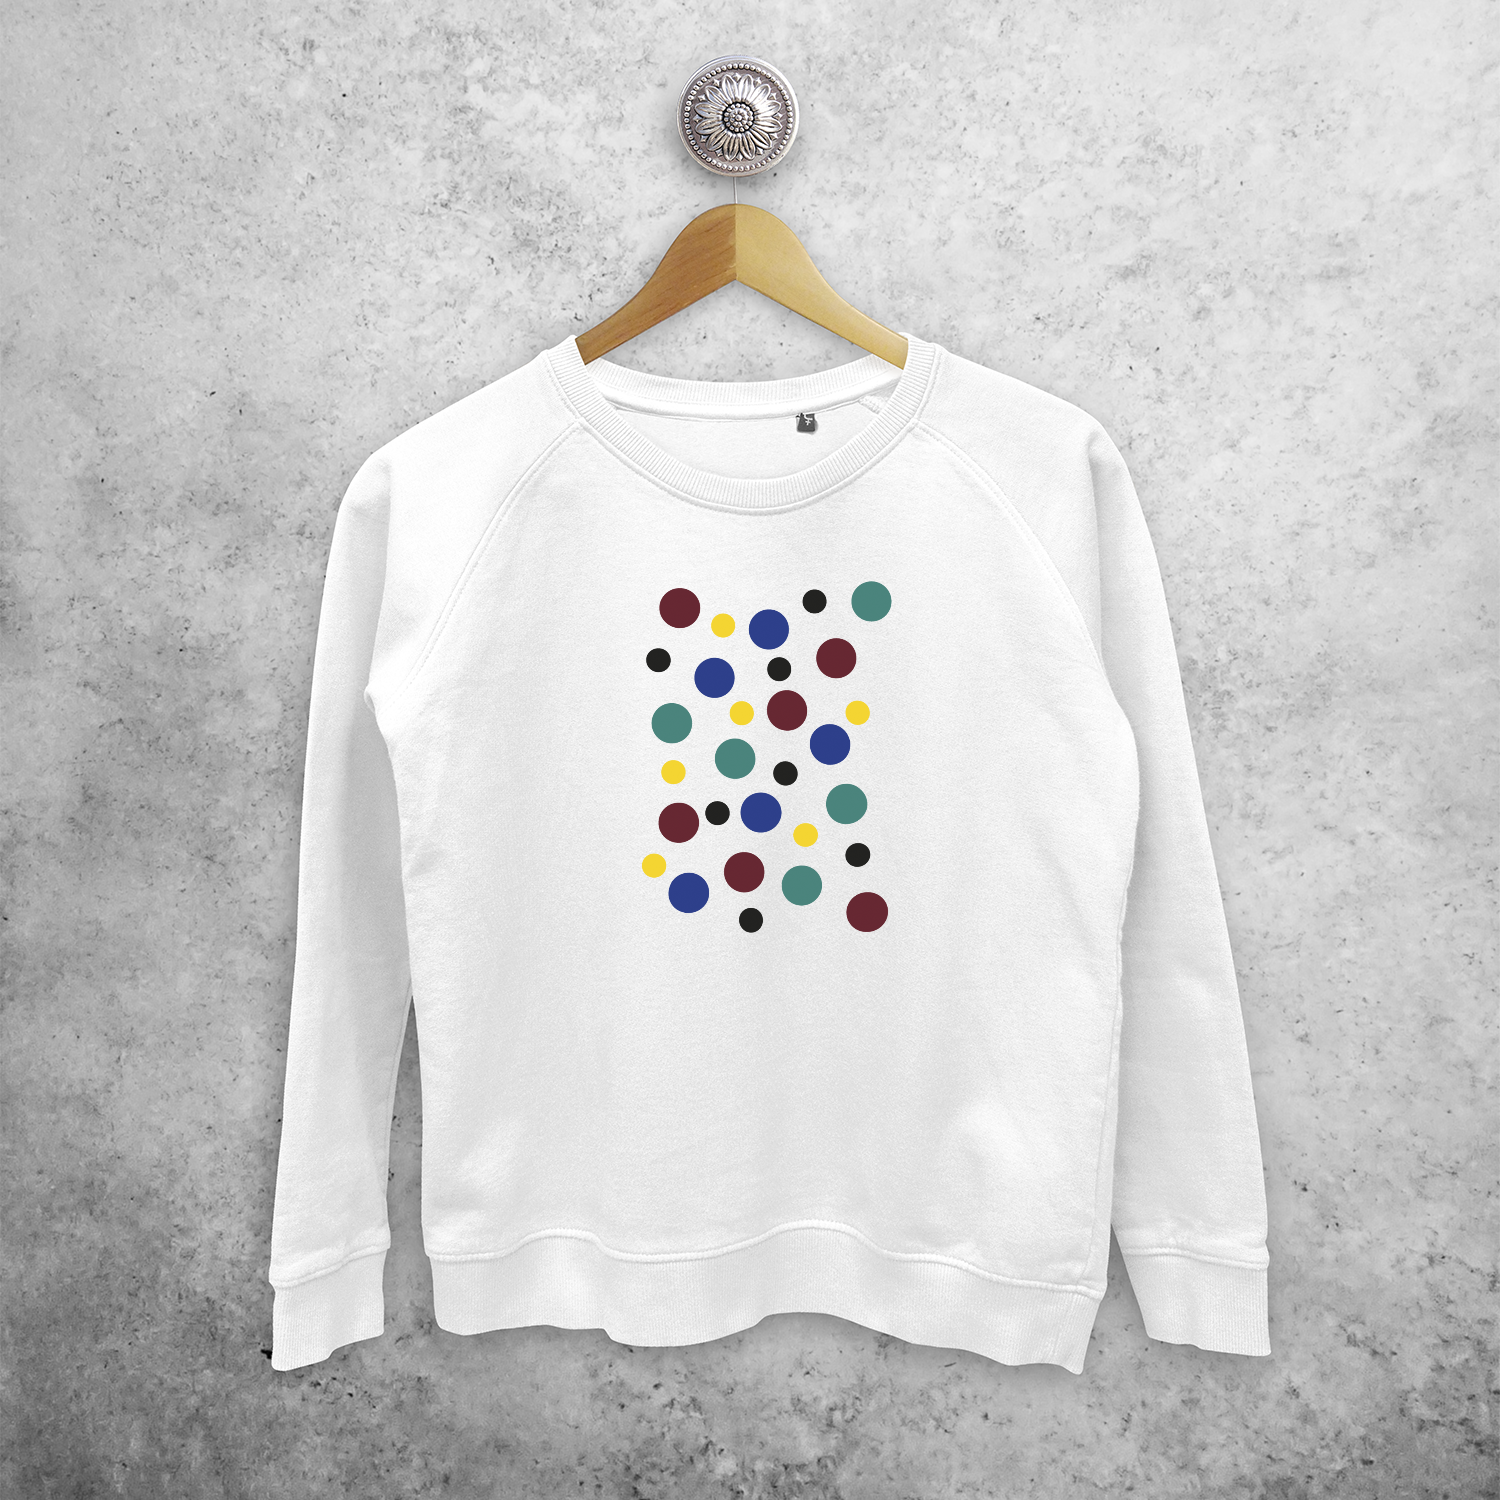 Dots sweater